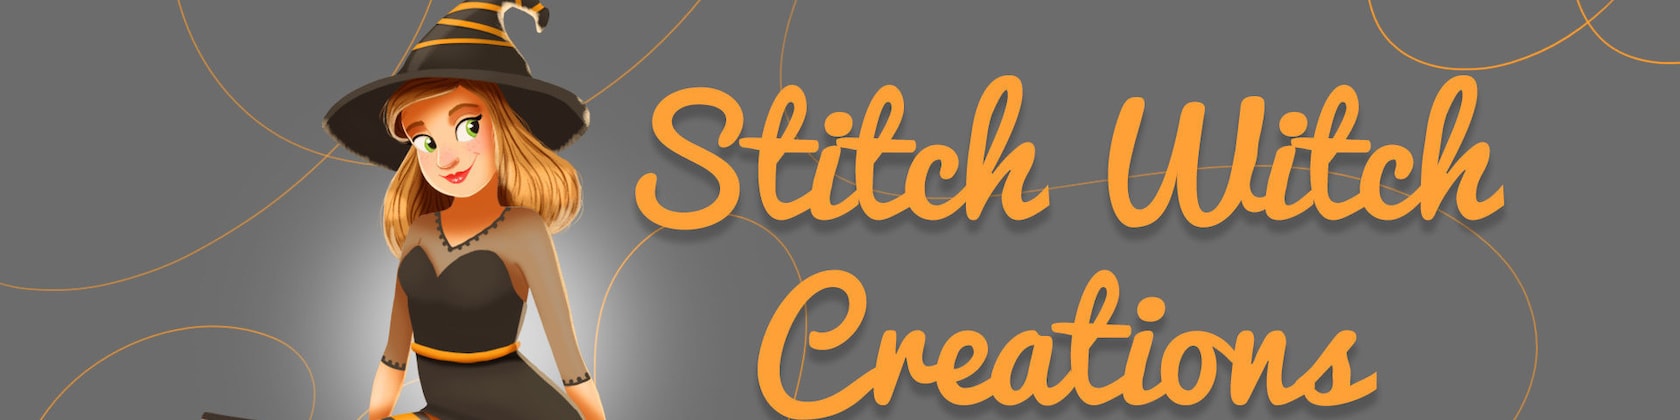 StitchWitchCreations 